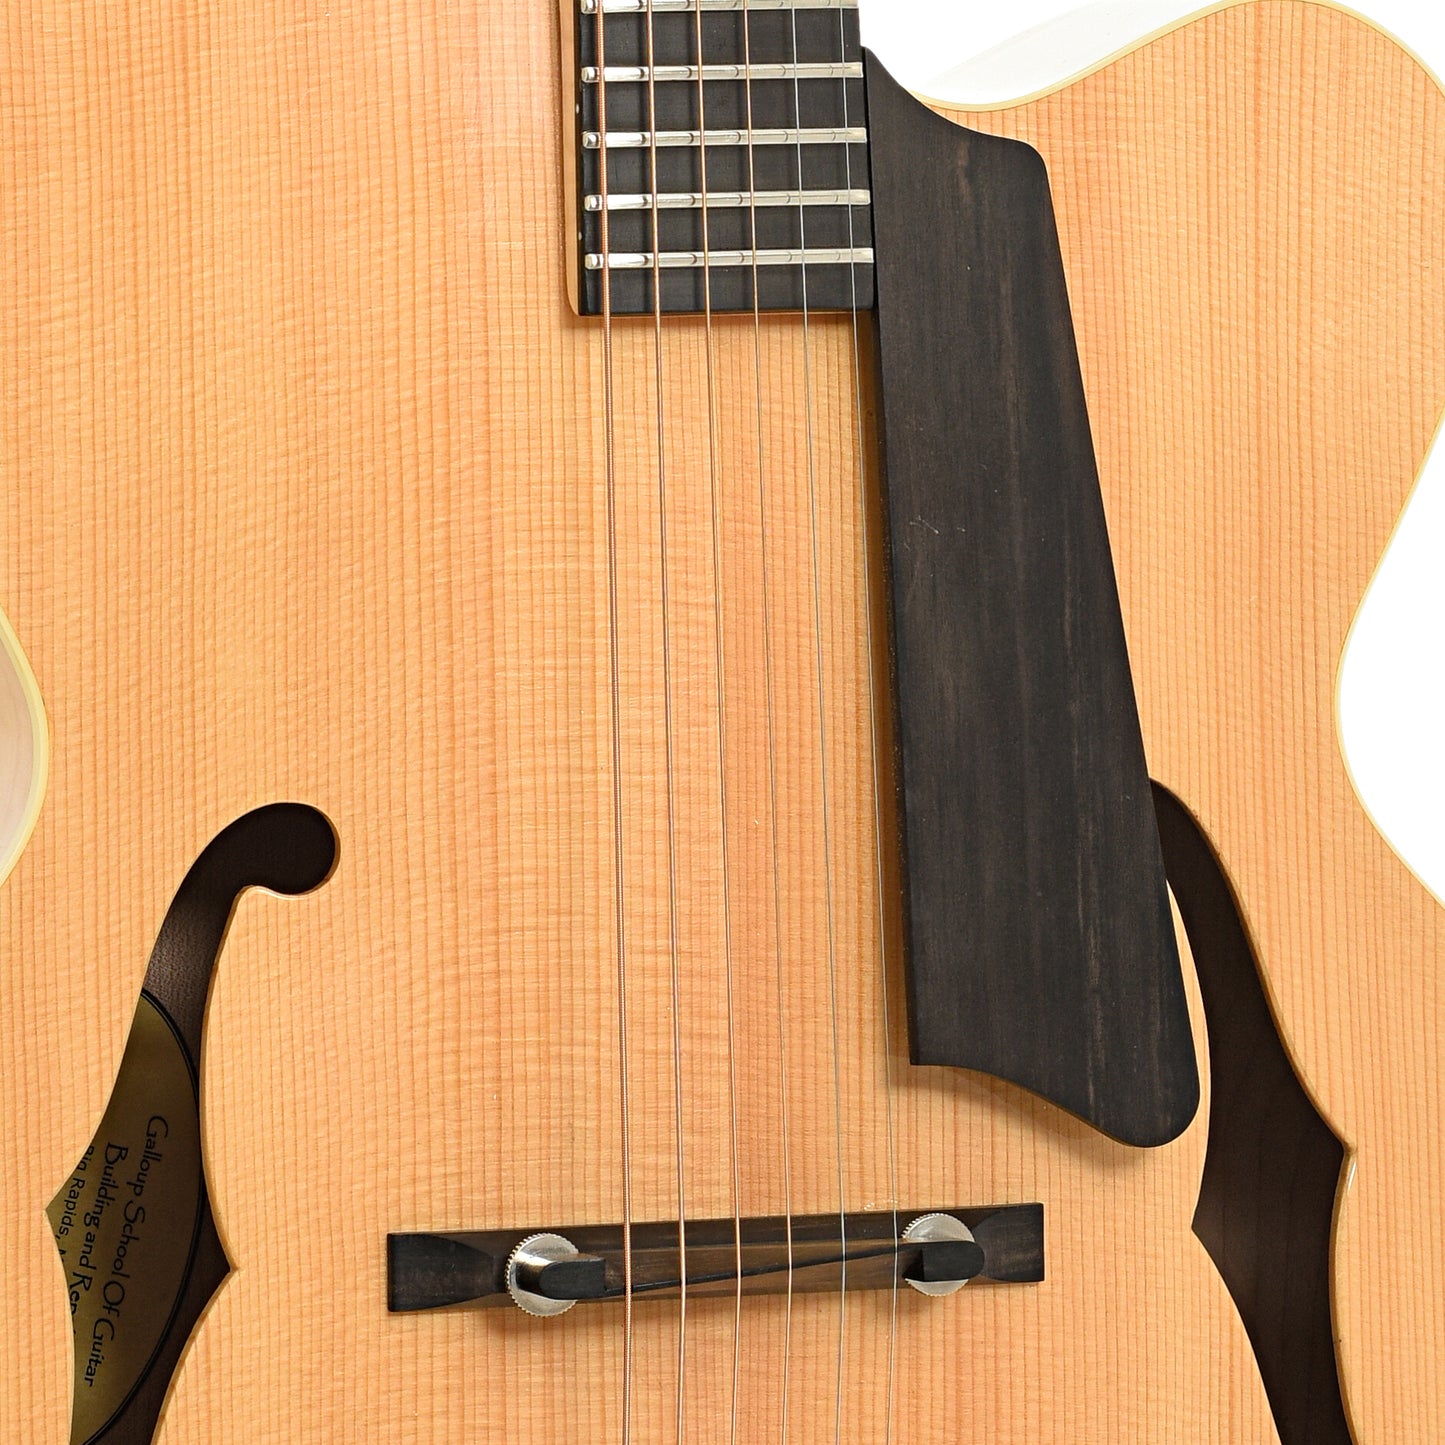 Bridge and pickguard of C. Dygard Gallup School Archtop Guitar (c.2014)